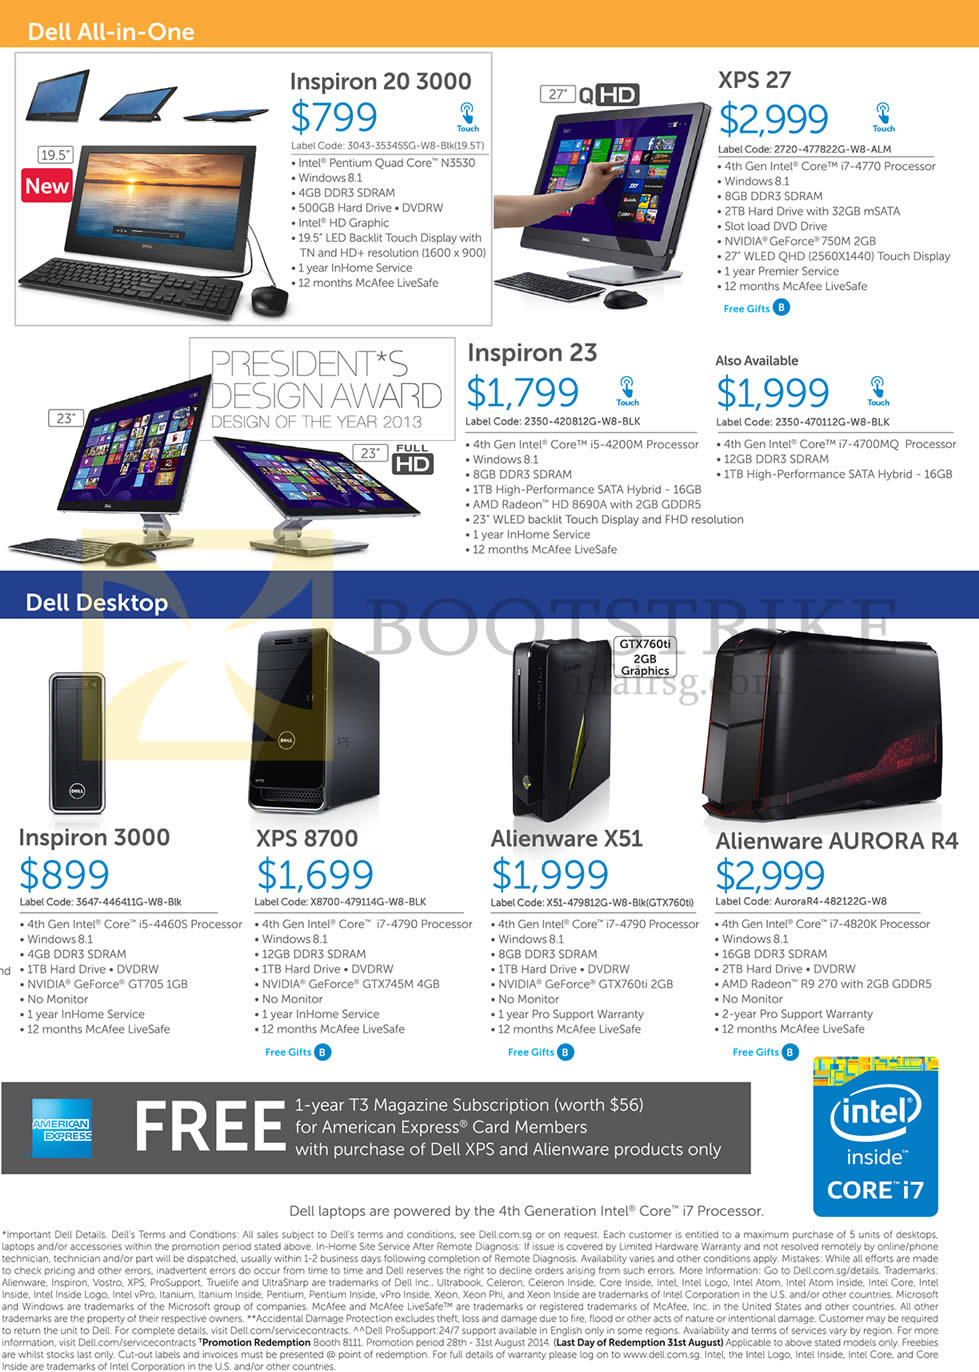 COMEX 2014 price list image brochure of Dell Desktop PCs AIO Inspiron 20 3000, XPS 27, Inspiron 23, Inspiron 3000, XPS 8700, Alienware X51, Aurora R4